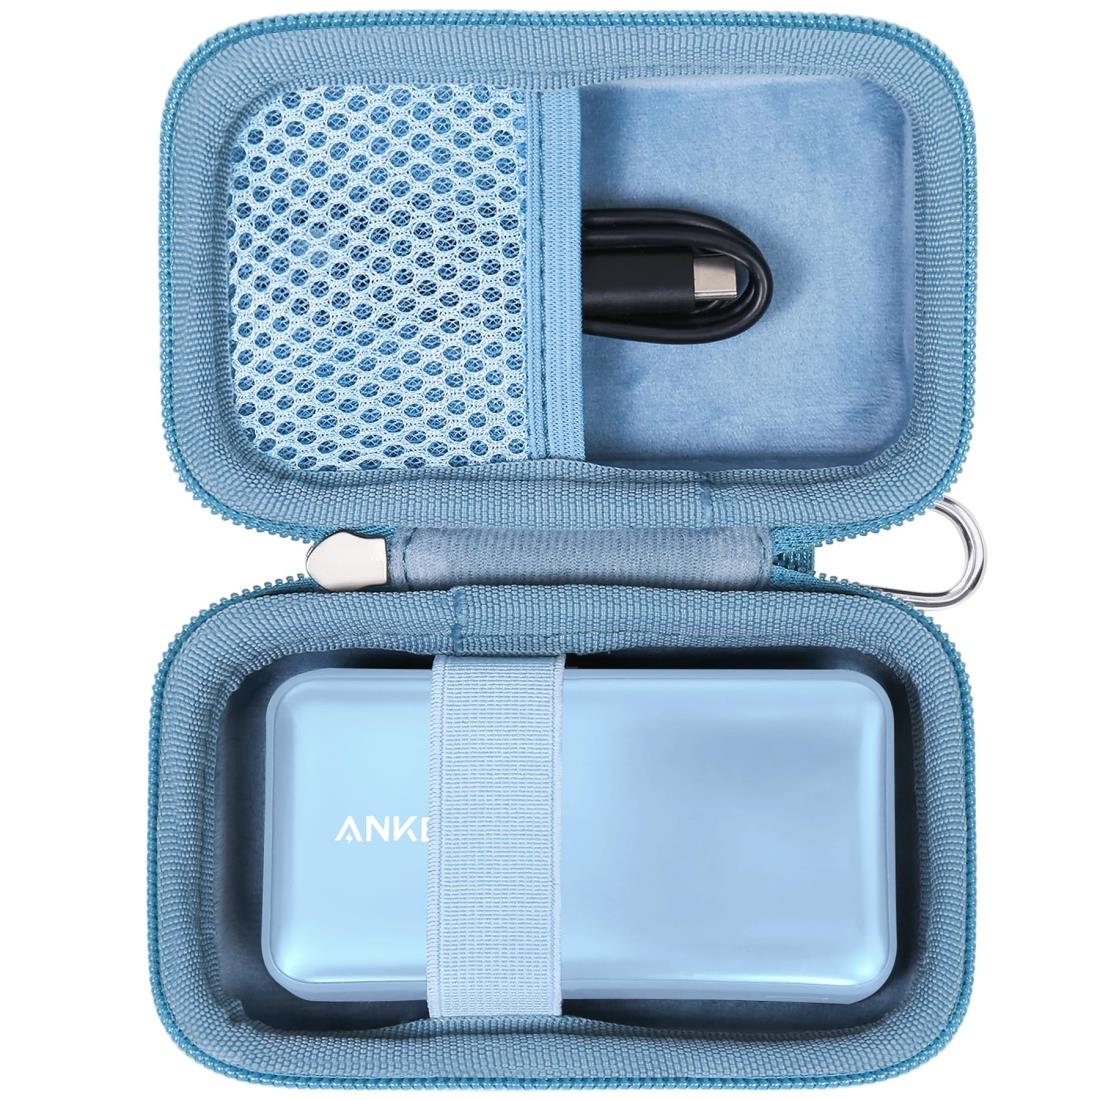 【Khanka 収納ケース】アンカー Anker Power Bank (10000mAh, 30W) Anker 533 Power Bankモバイルバッテリー ，Anker Nano Power Bank (30W, Built-In USB-C Cable)に対応，ブルー（ケースのみ）